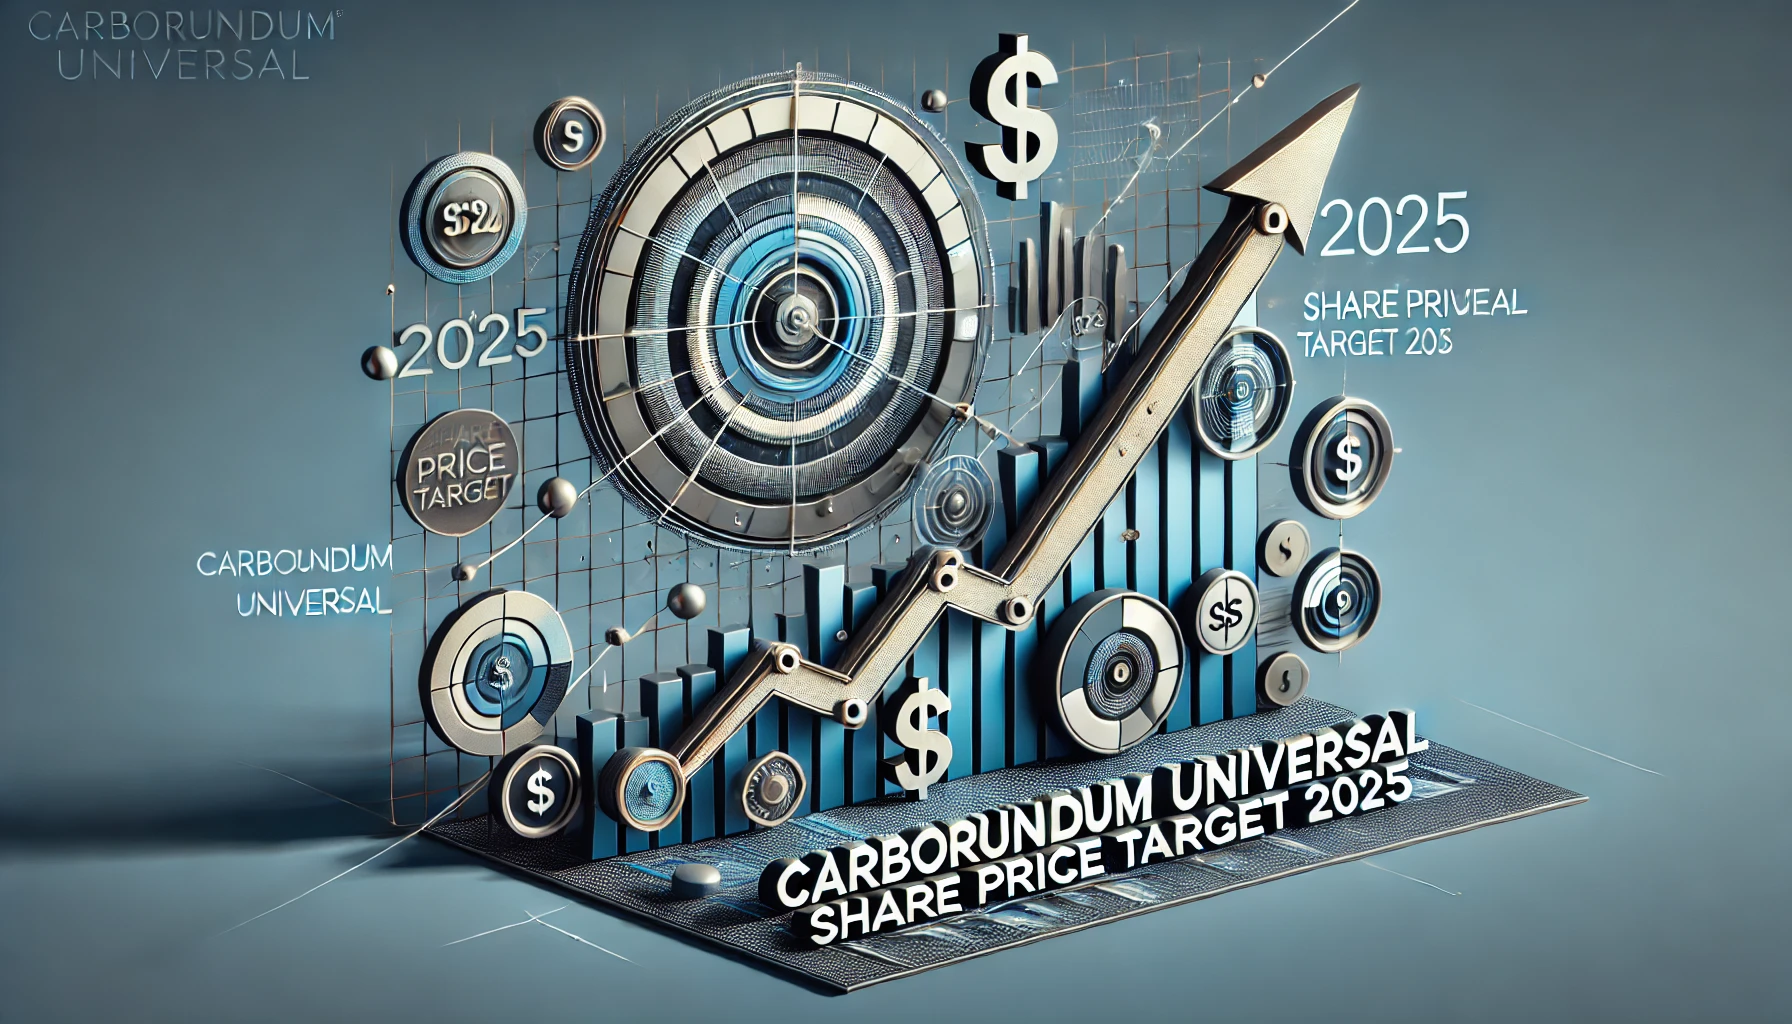 Carborundum Universal Share Price Target 2025